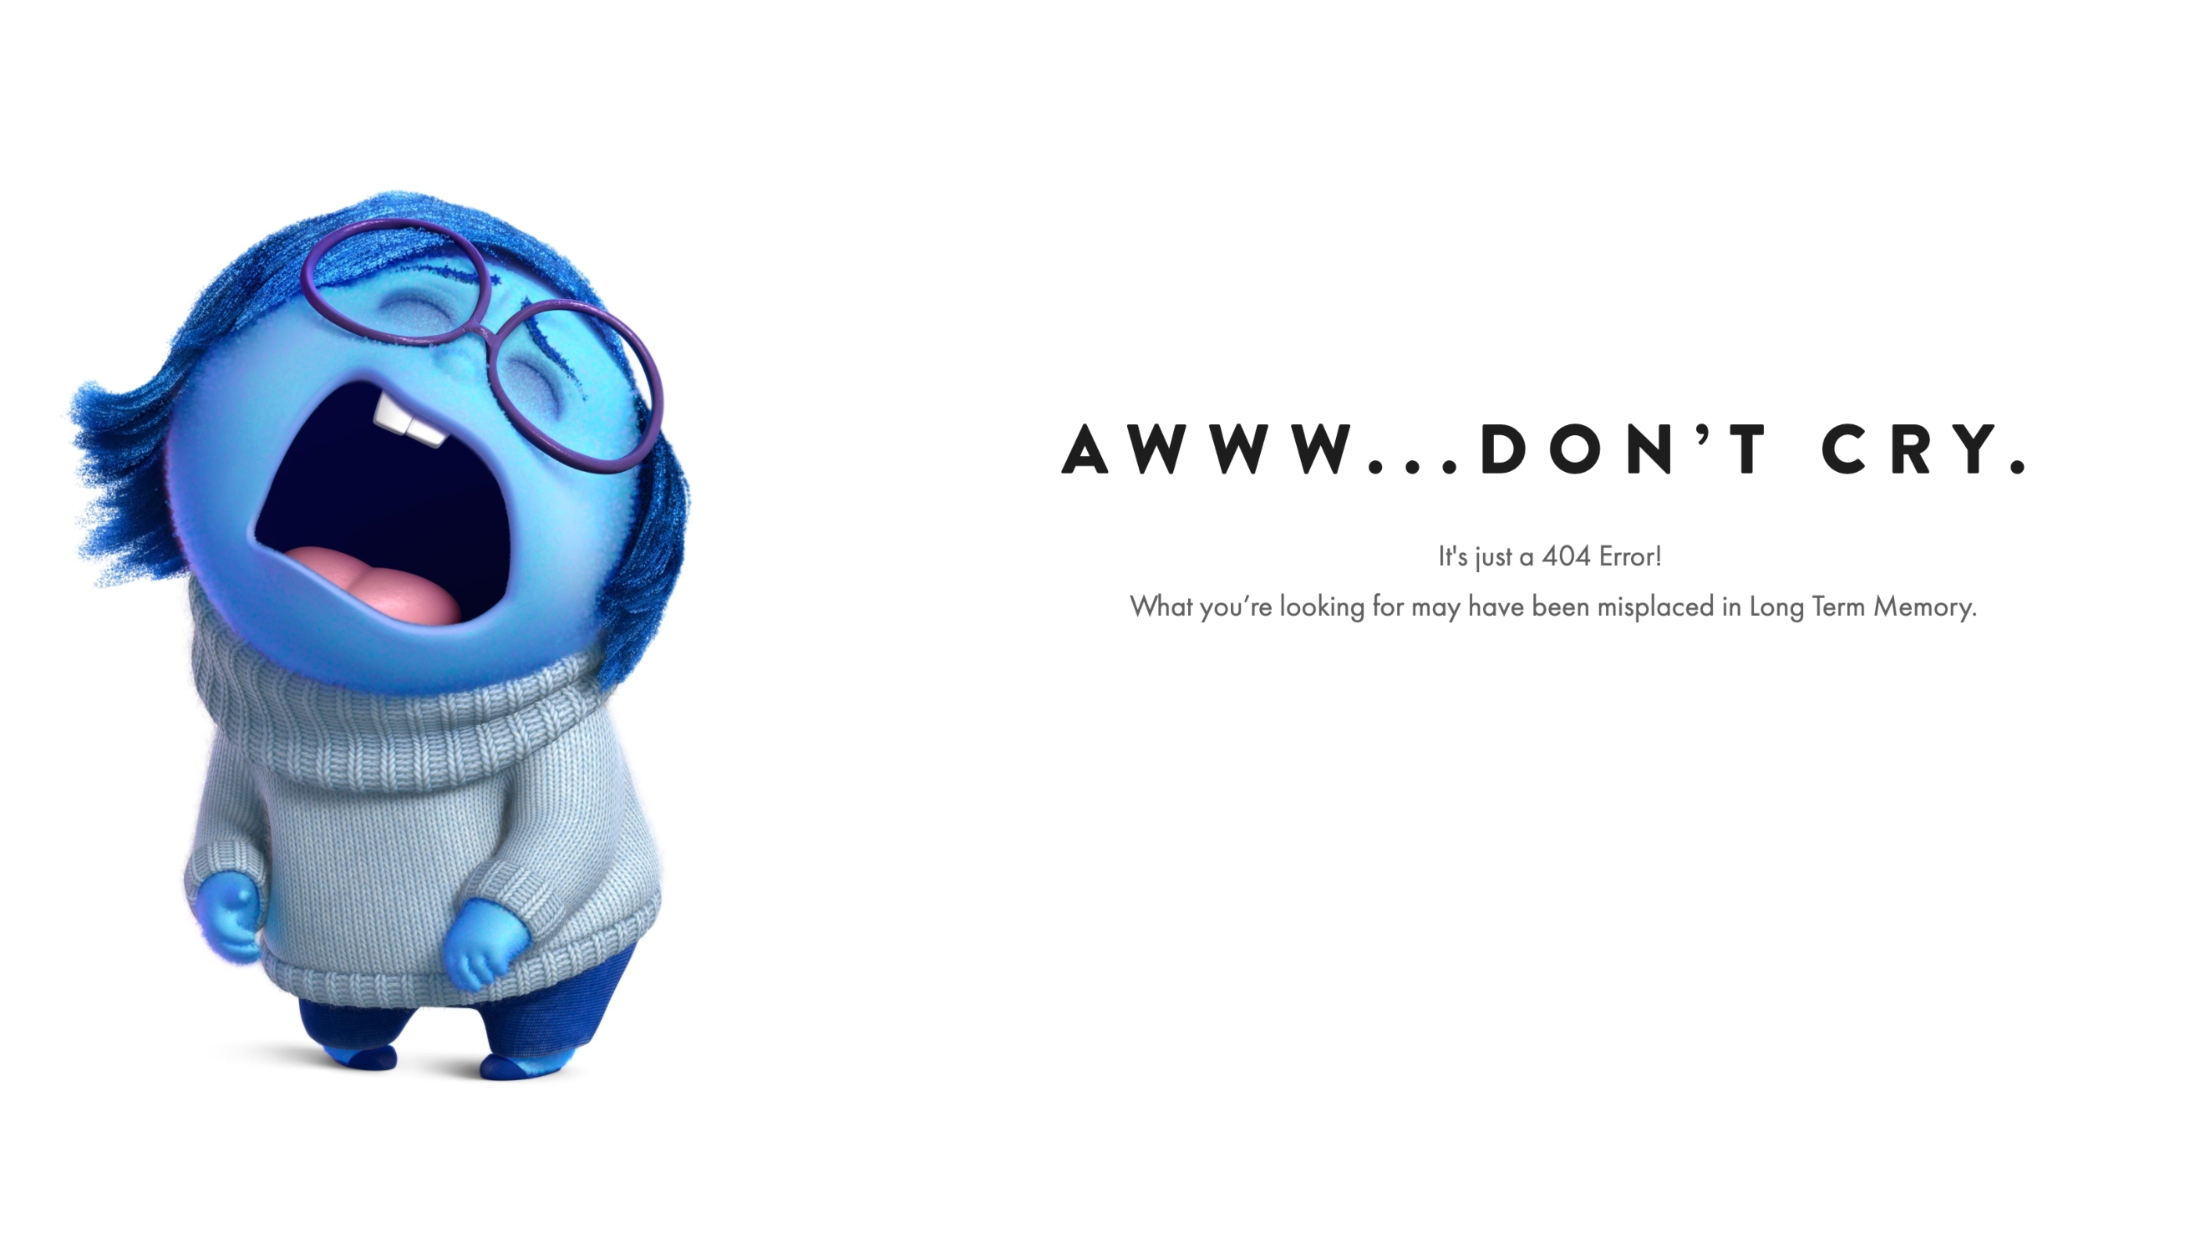 Pixar's 404 Page